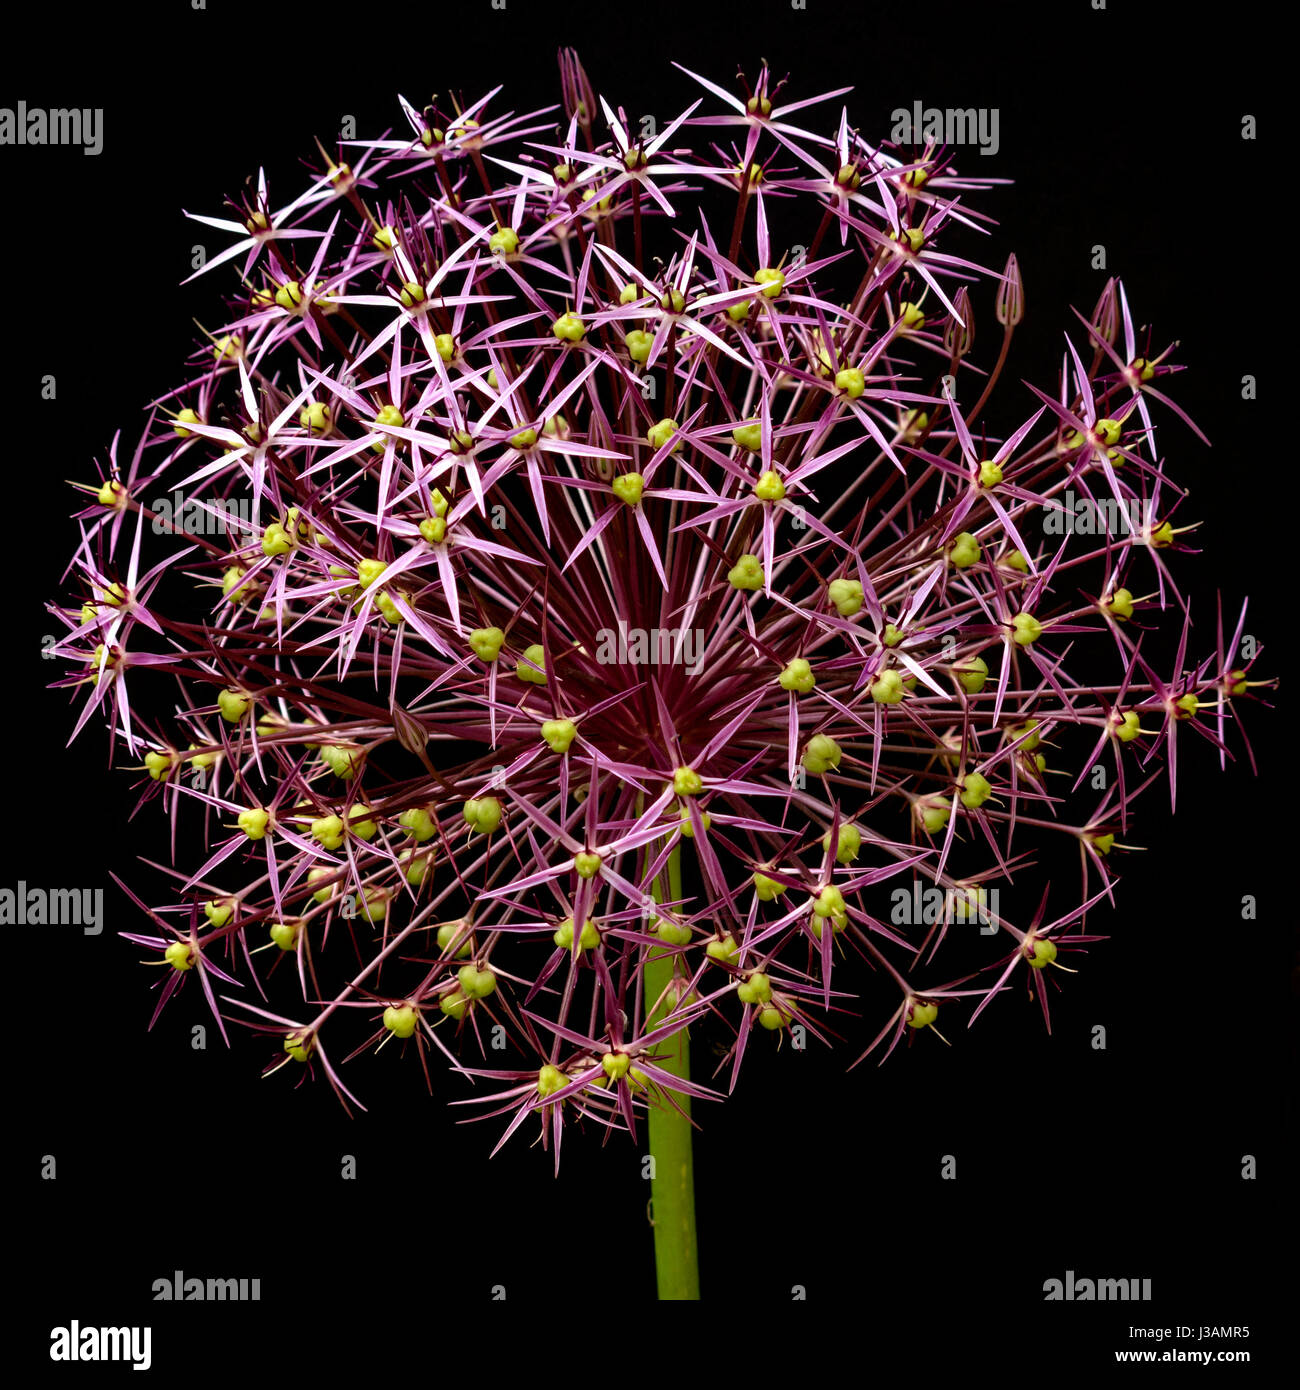 Purple Allium globe flower head against plain black background Stock Photo